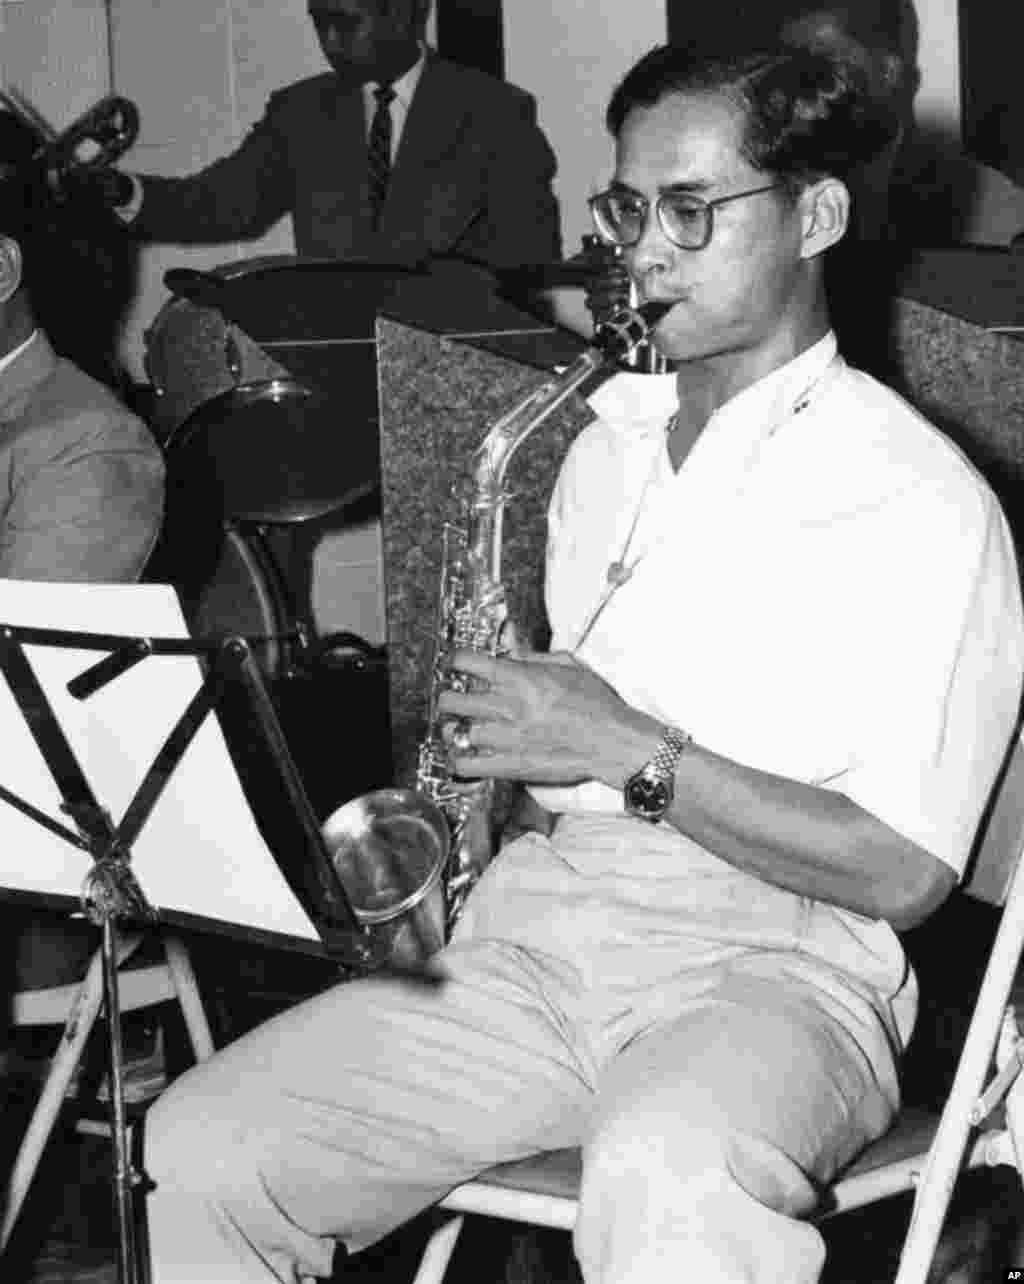 King Bhumibol Adulyadej clad in sports shirt and slacks, swings into a hot chorus on the alto sax with his 13-piece jazz band, Nov. 13, 1962.